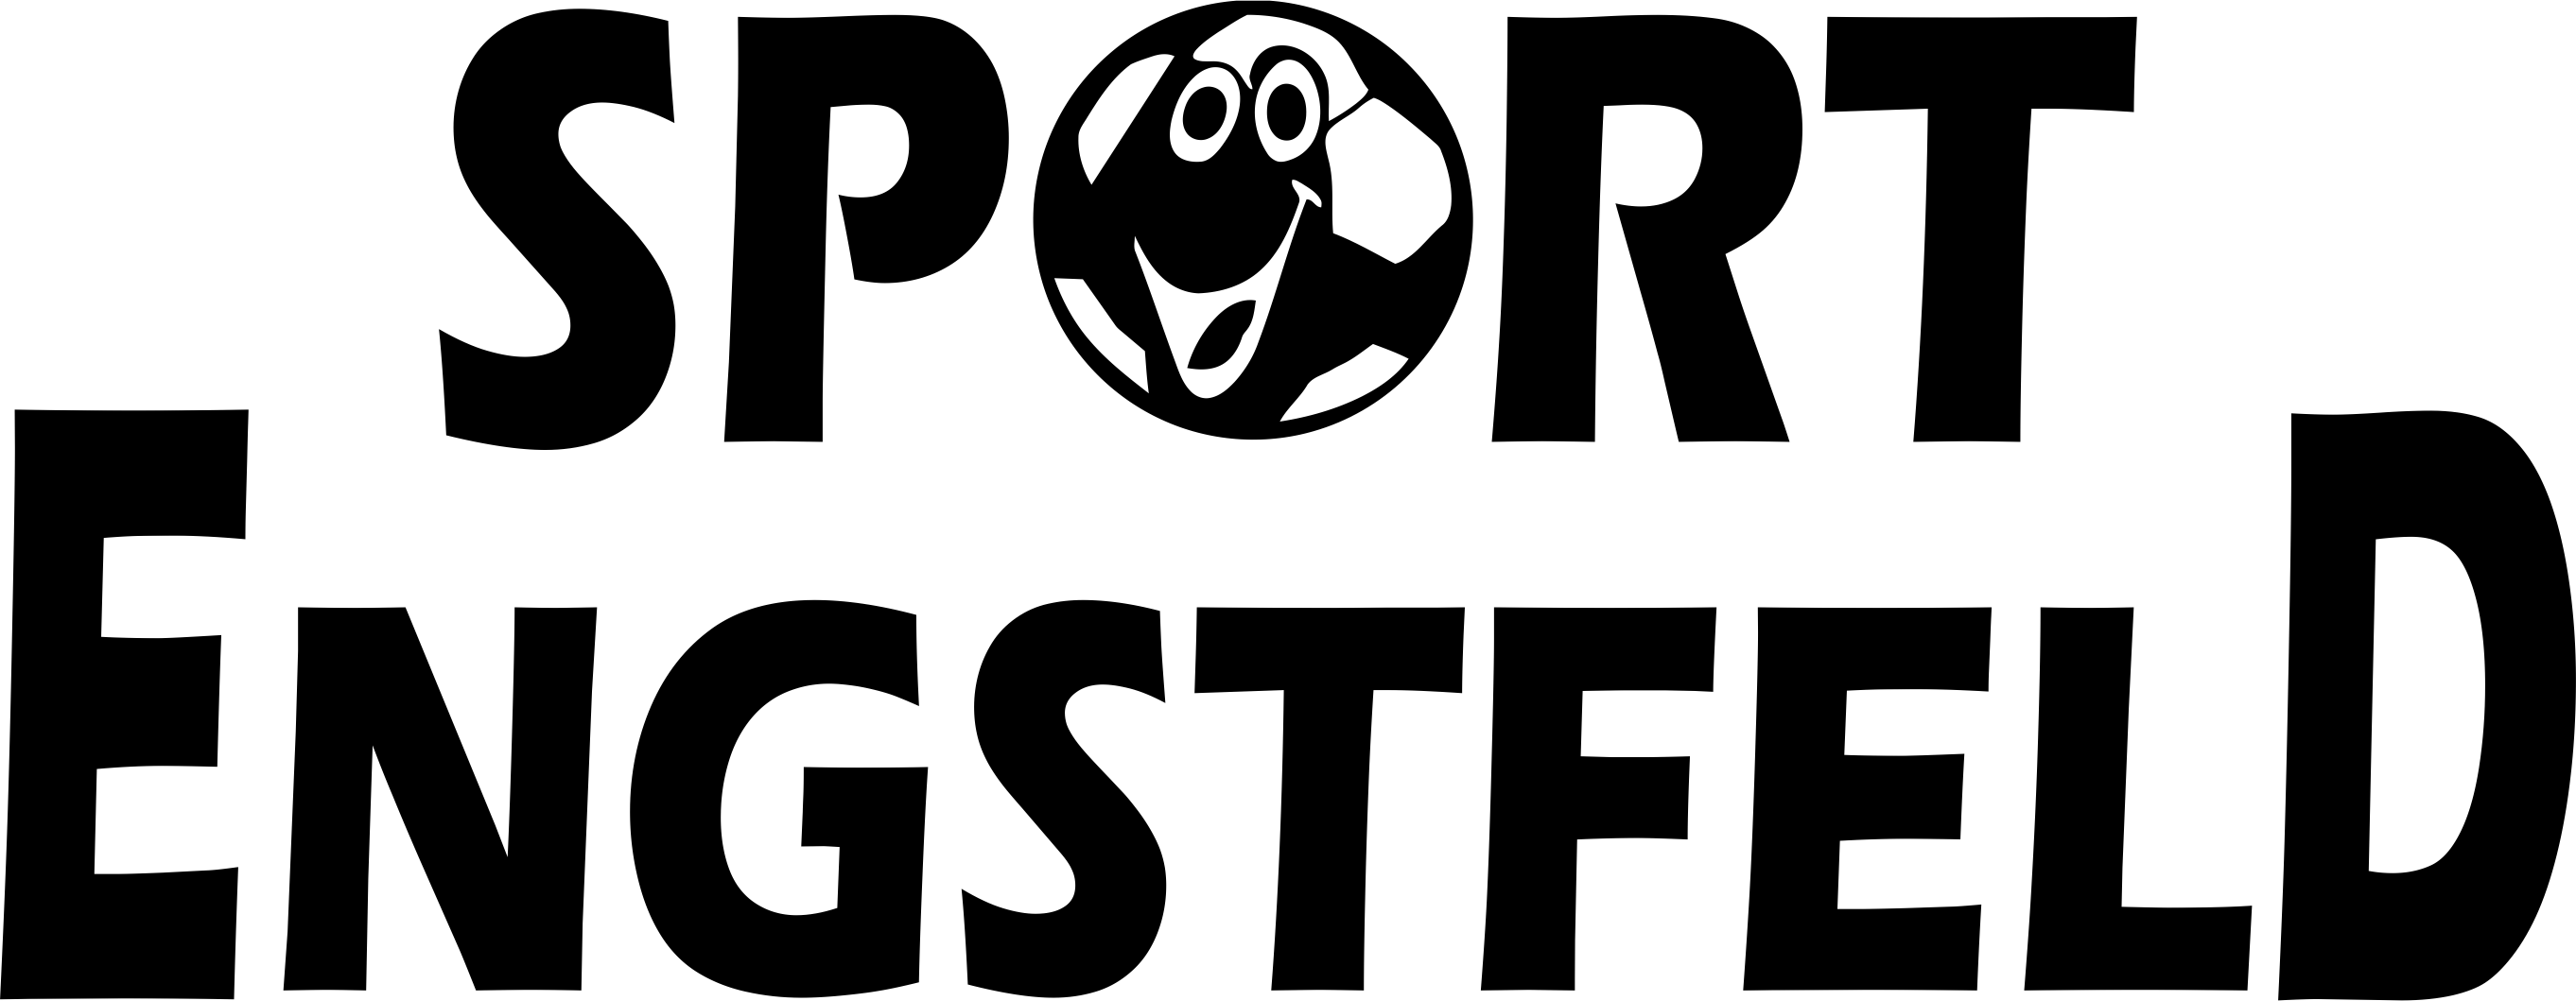 MBC Kierspe Logo 2